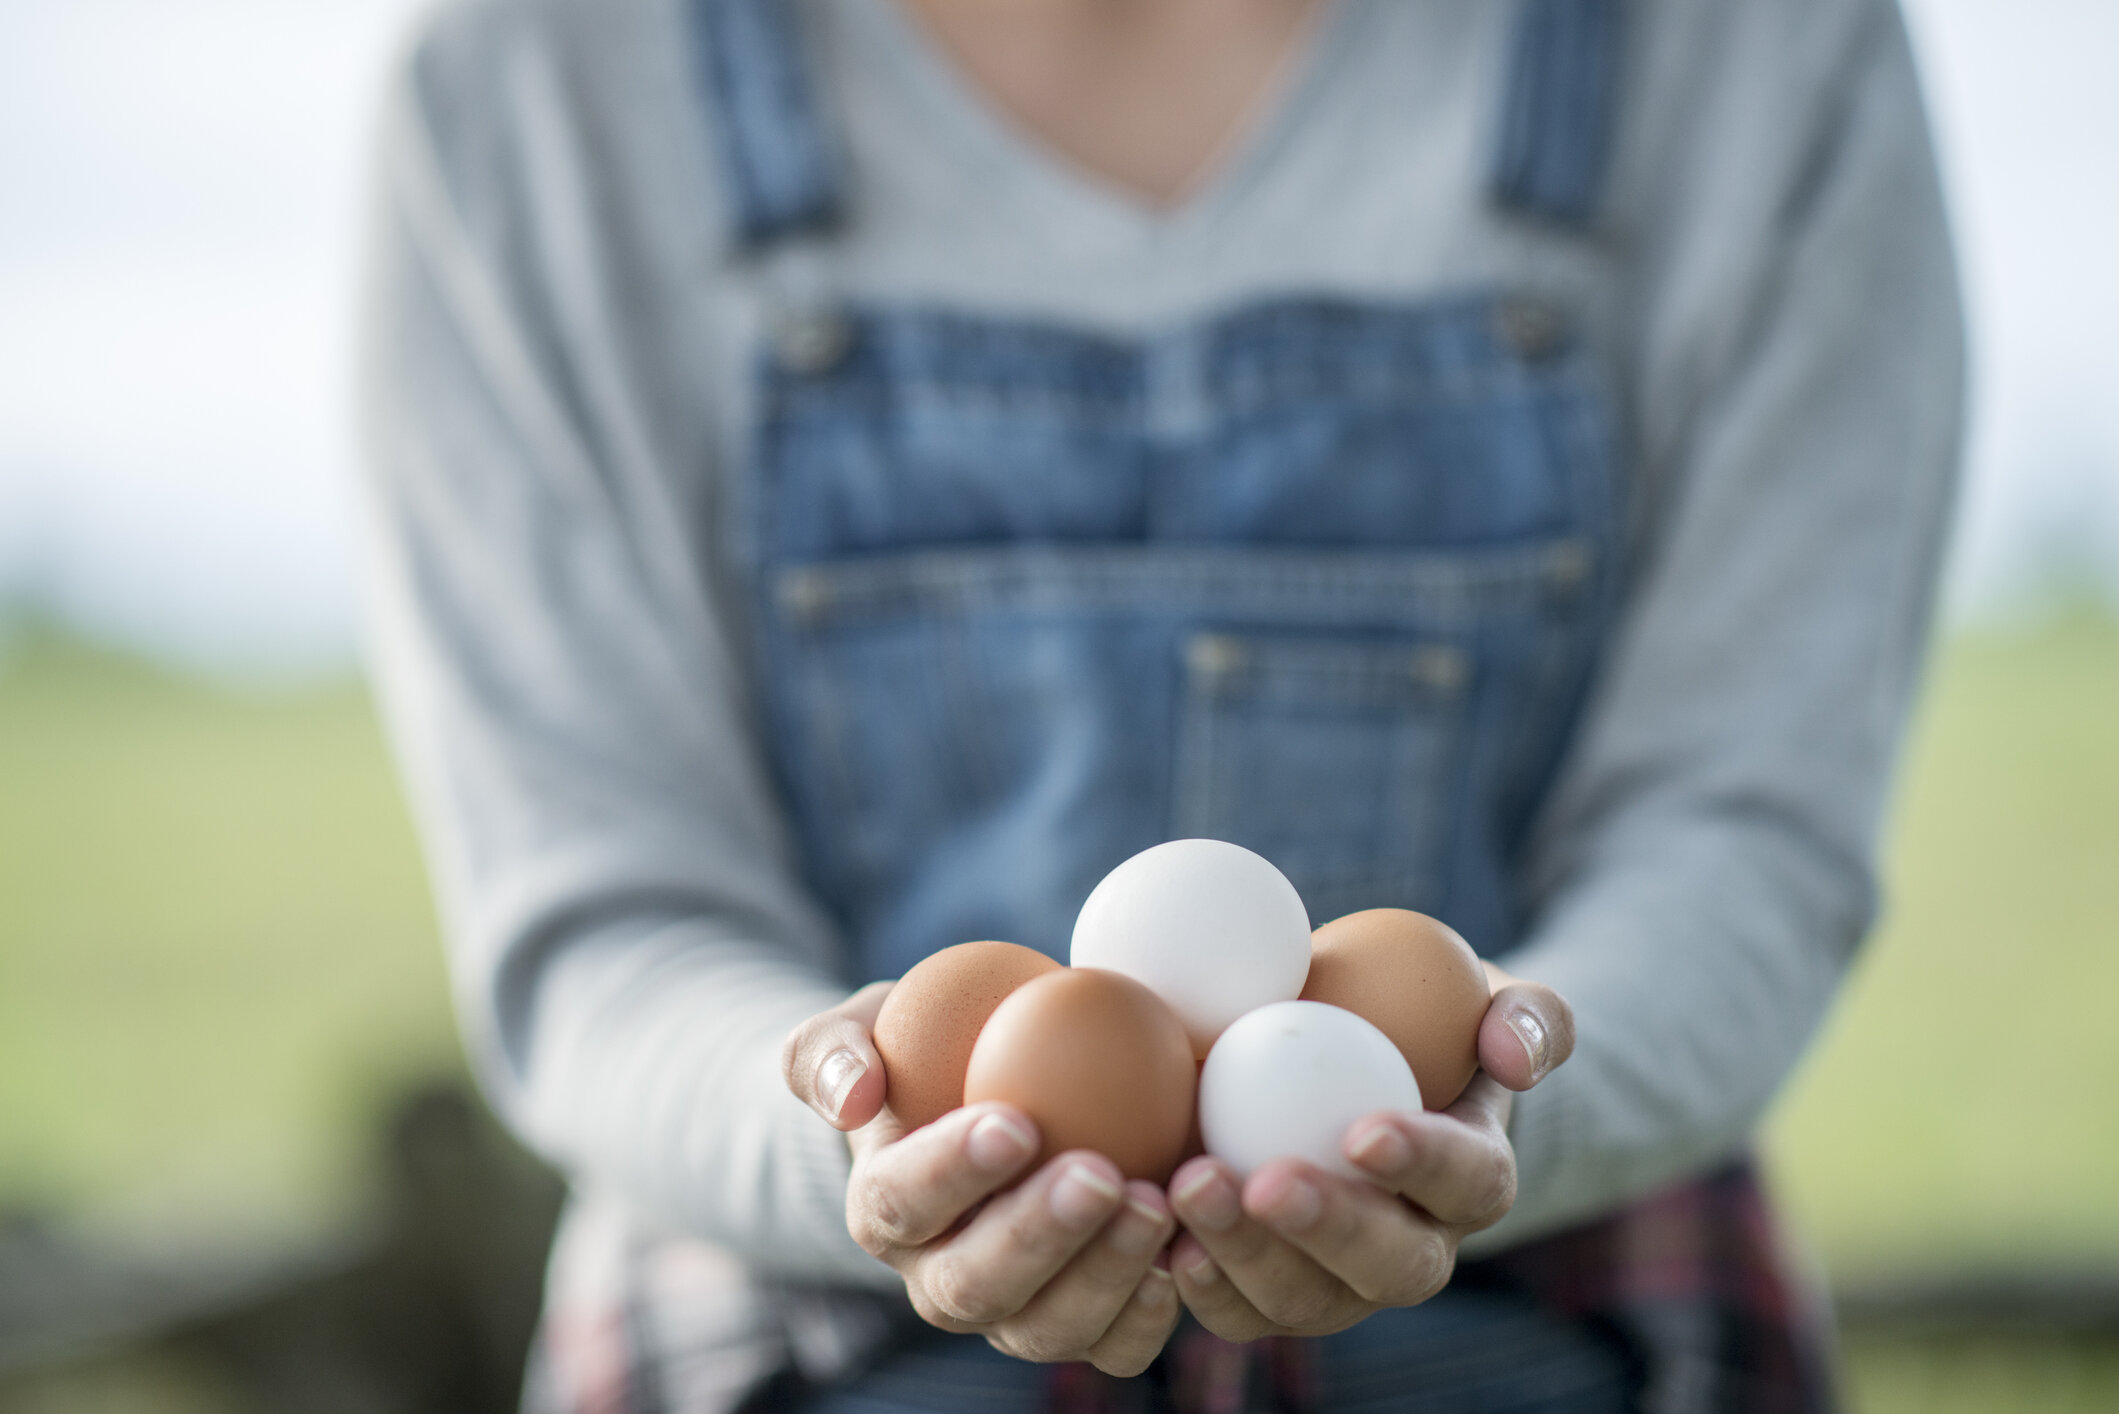 Ontario egg farmers donating over 100,000 eggs to food banks.